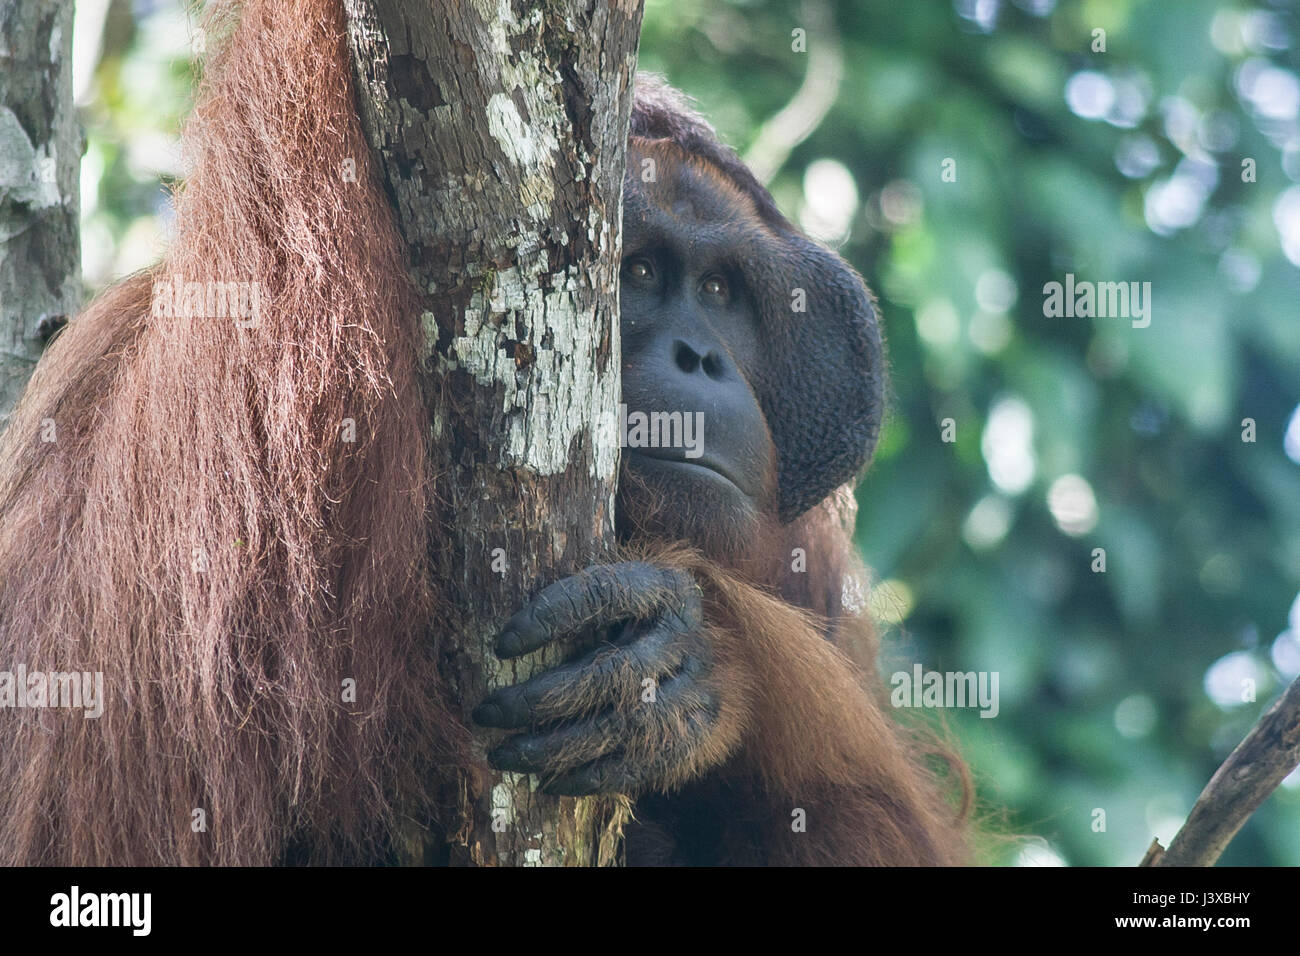 Critically endangered Bornean orangutan (Pongo pygmaeus). Mature males have the characteristic cheek pads. Stock Photo